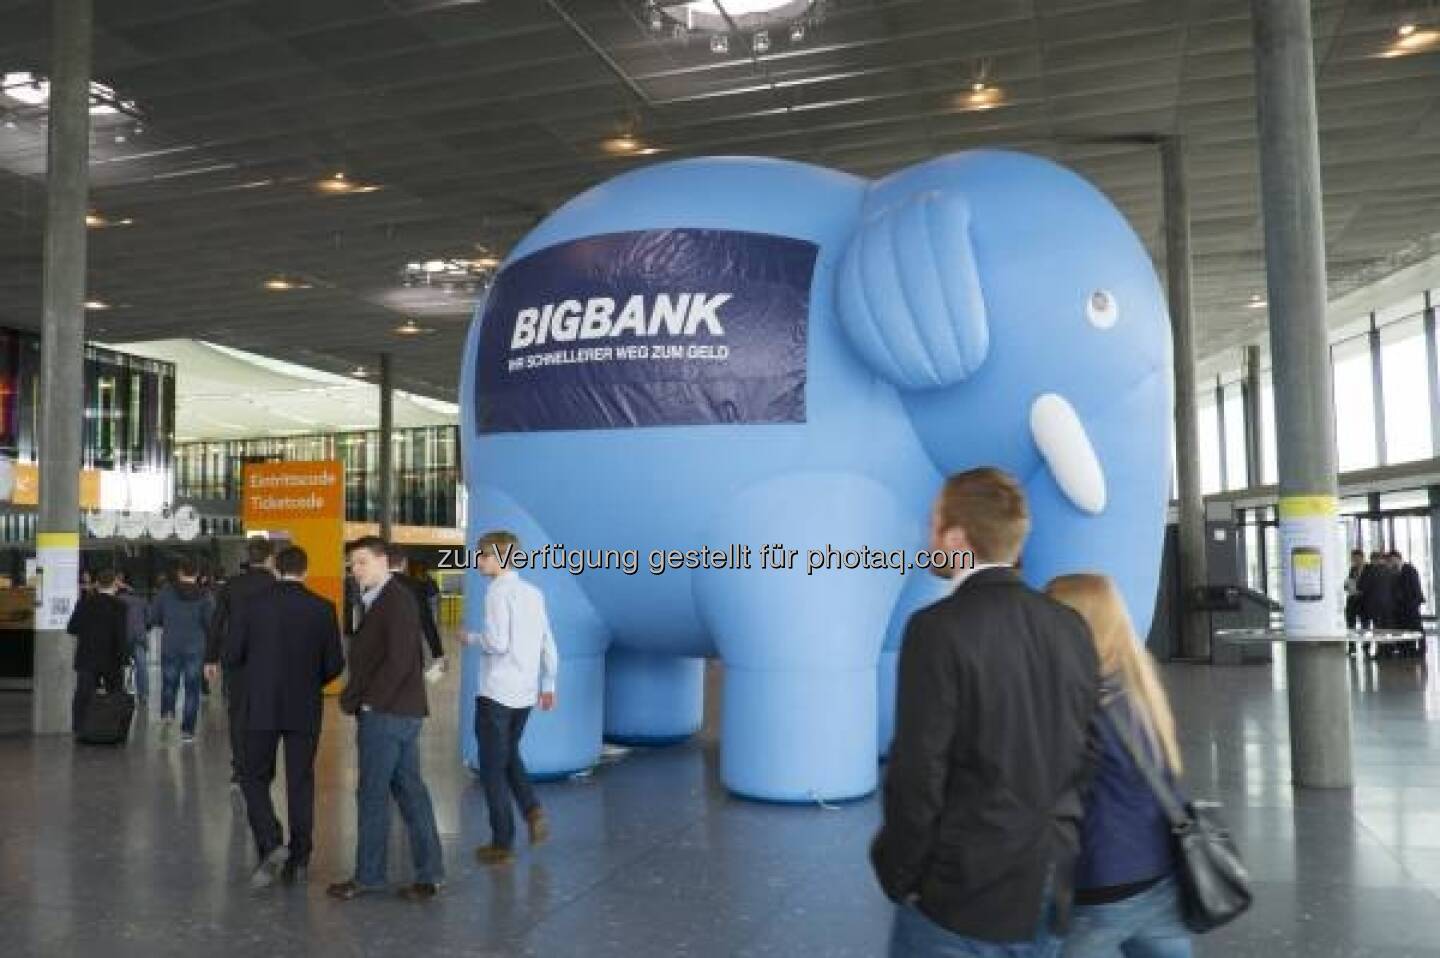 BigBank, Elefant, Invest 2013 in Stuttgart - http://www.messe-stuttgart.de/invest/